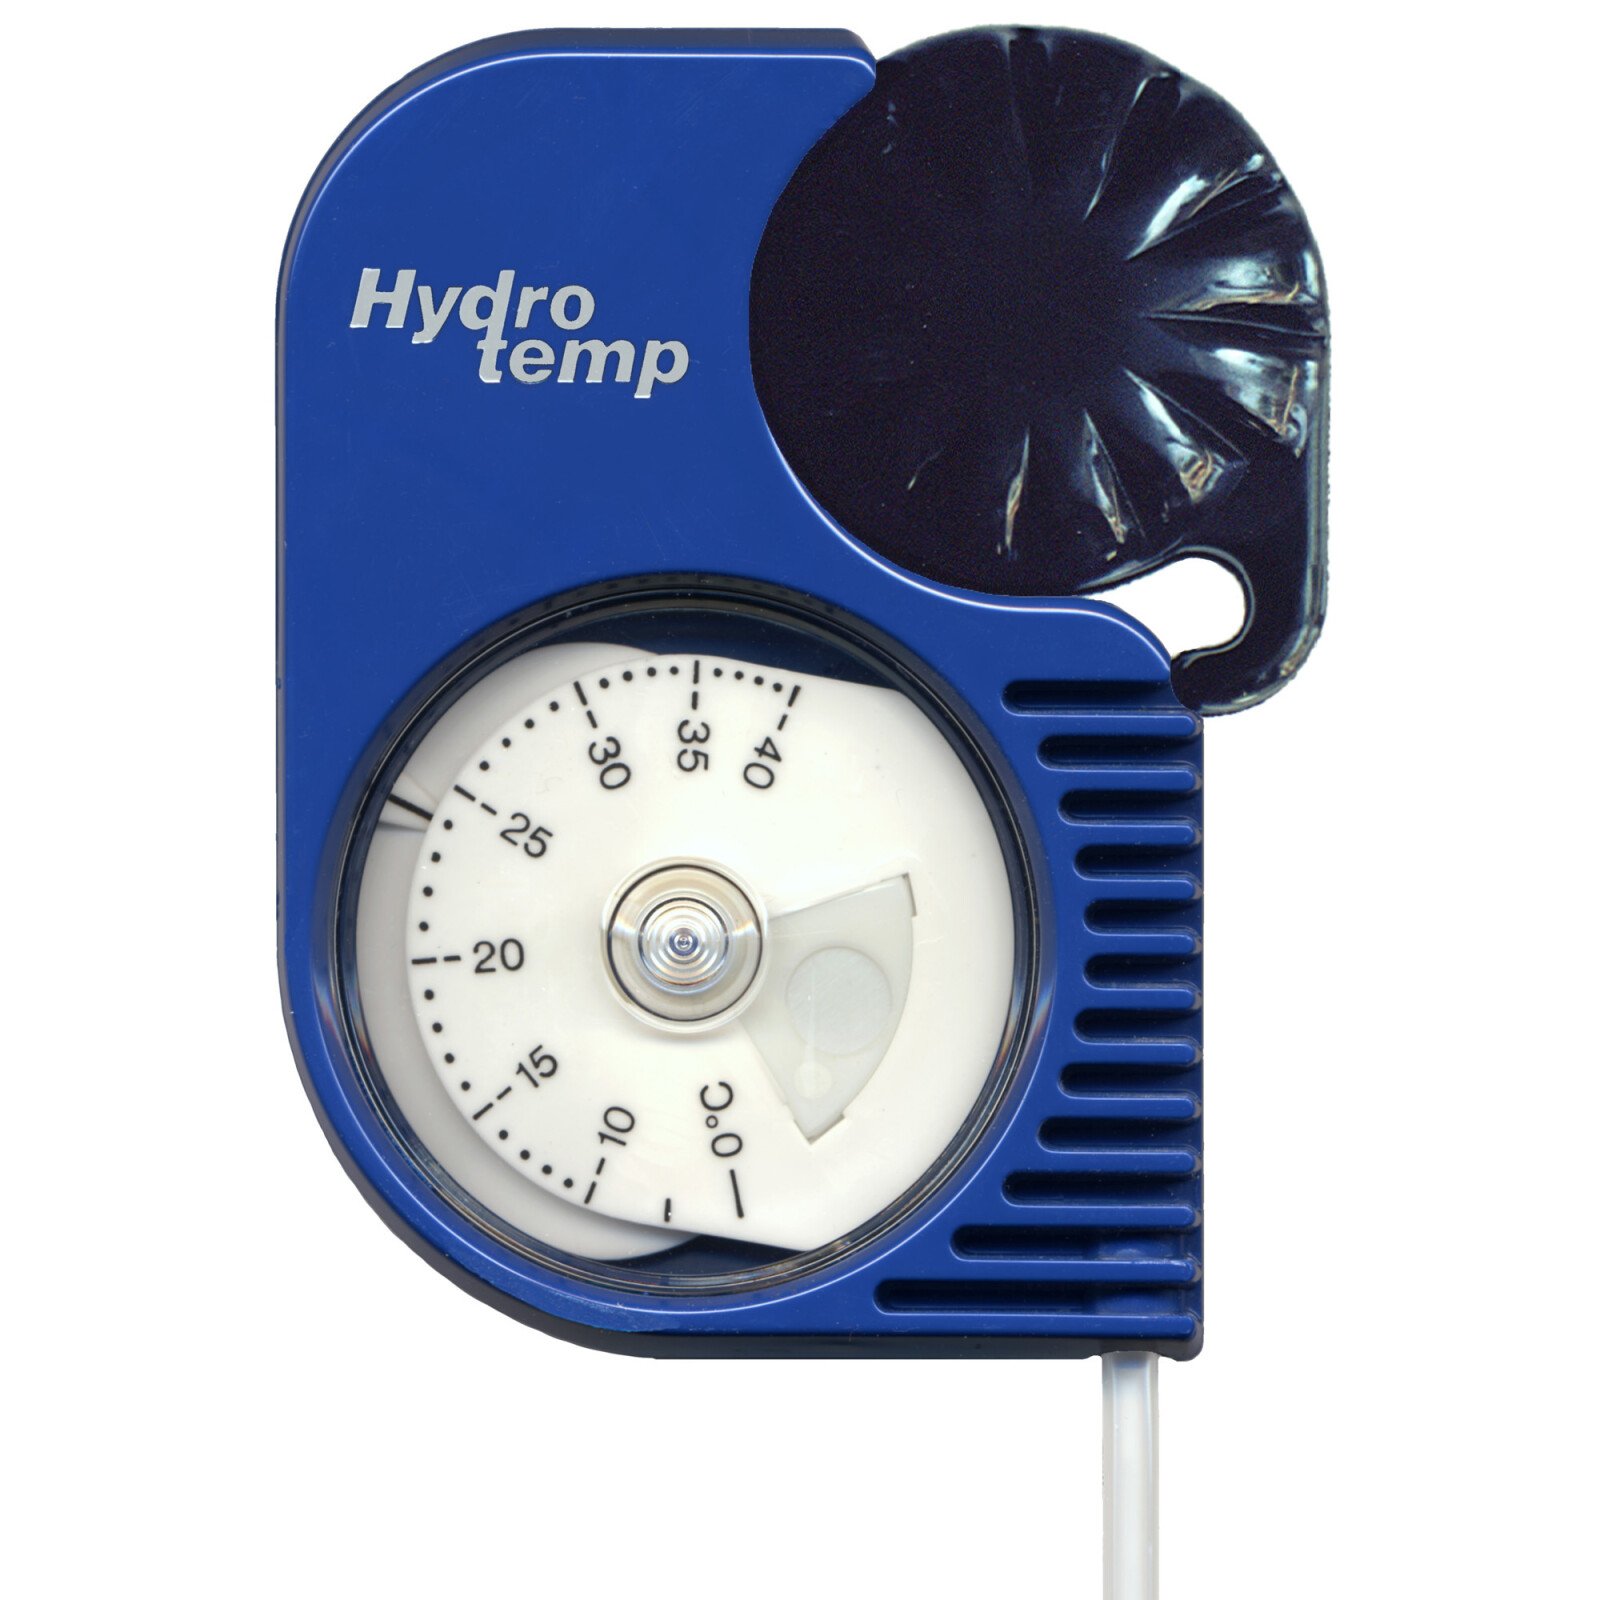 Professional anti freeze tester Hydro temp thumb